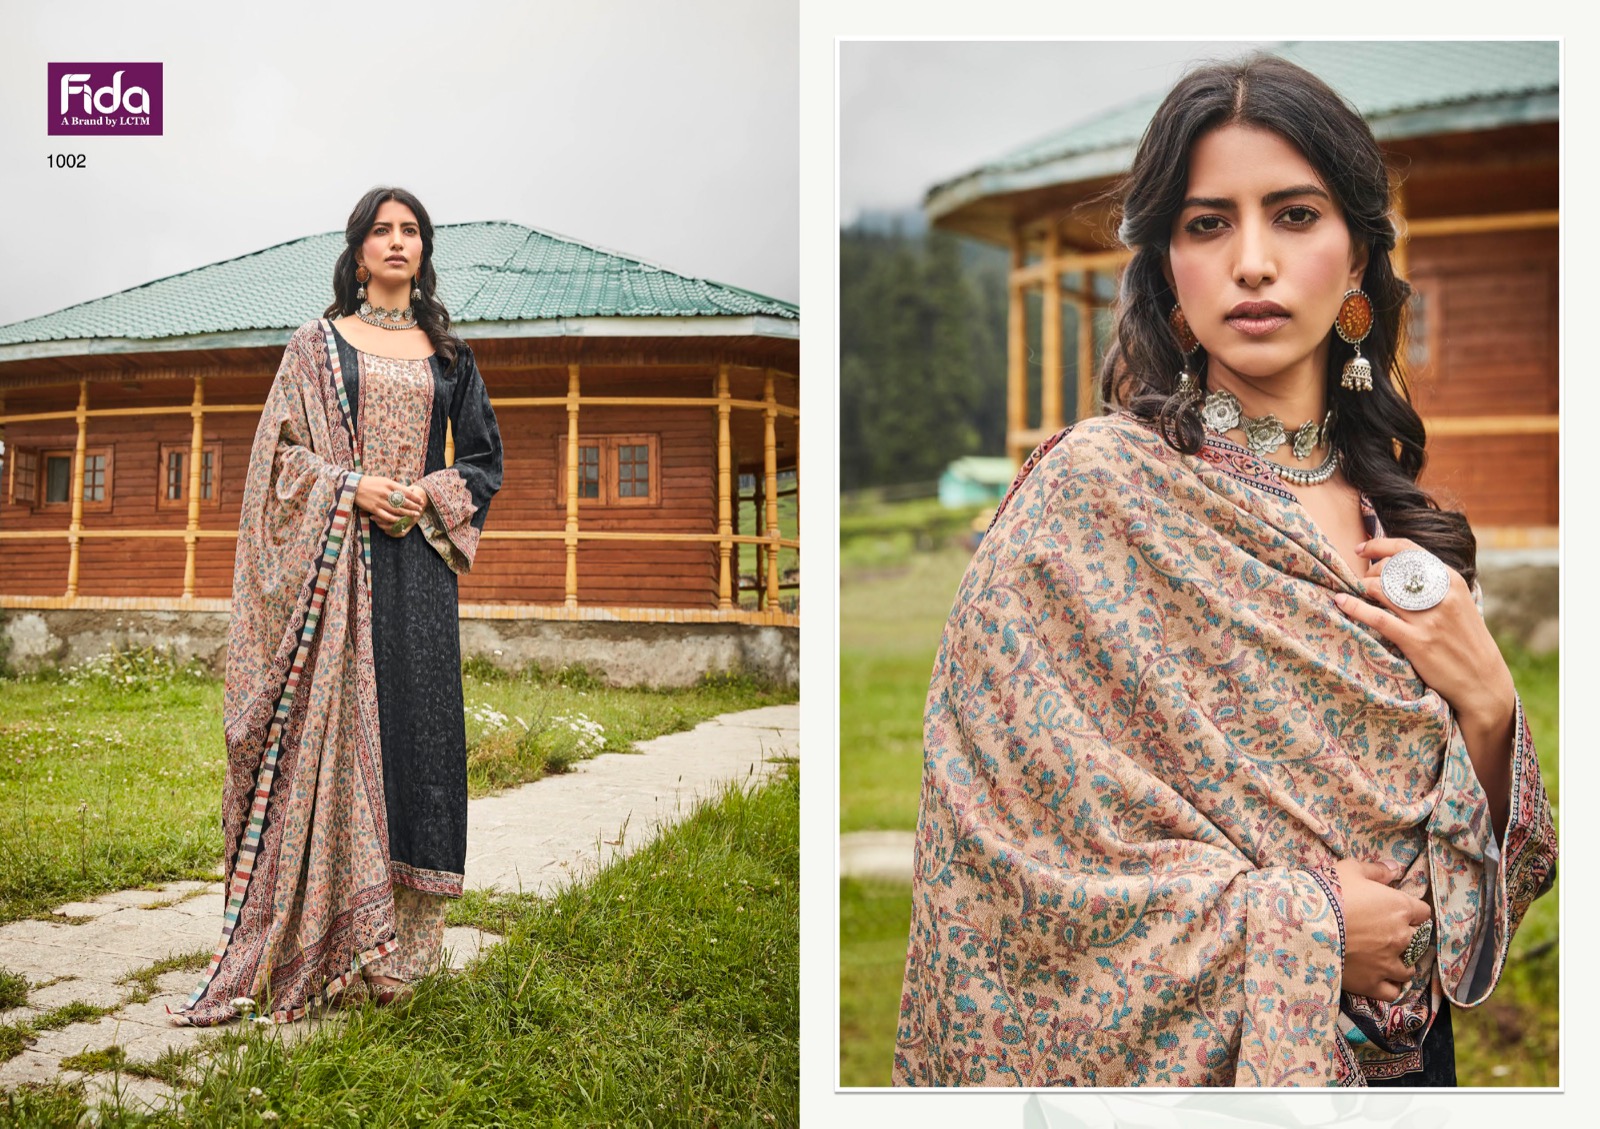 fida zehnaseeb digital cotton regal look salwar suit catalog